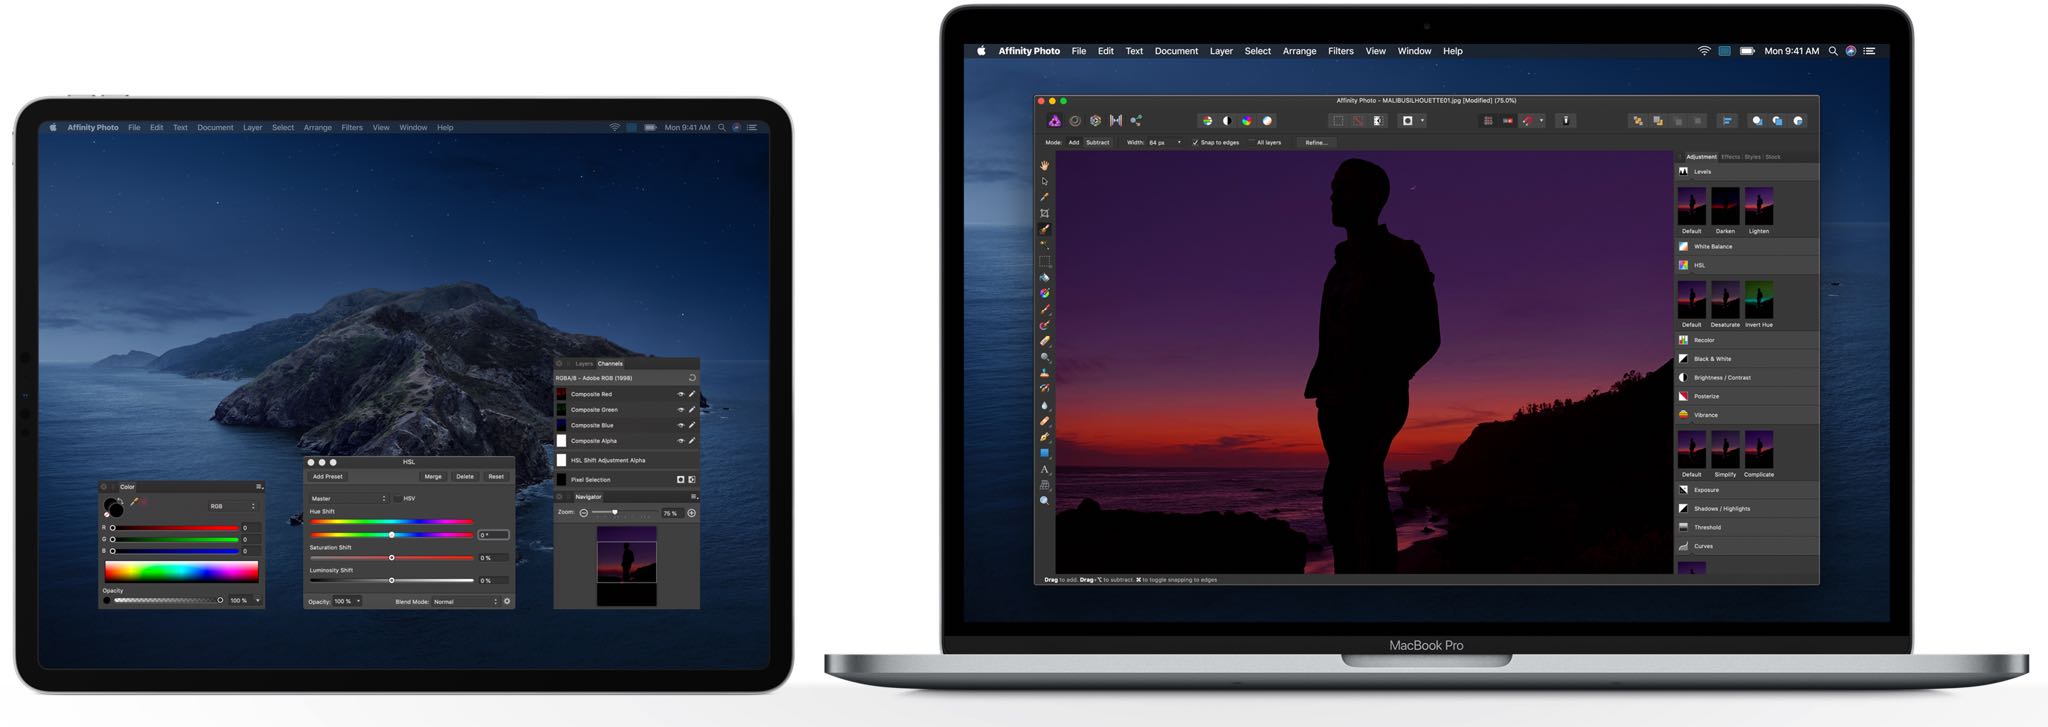 macOS-Catalina-Sidecar-extend-desktop